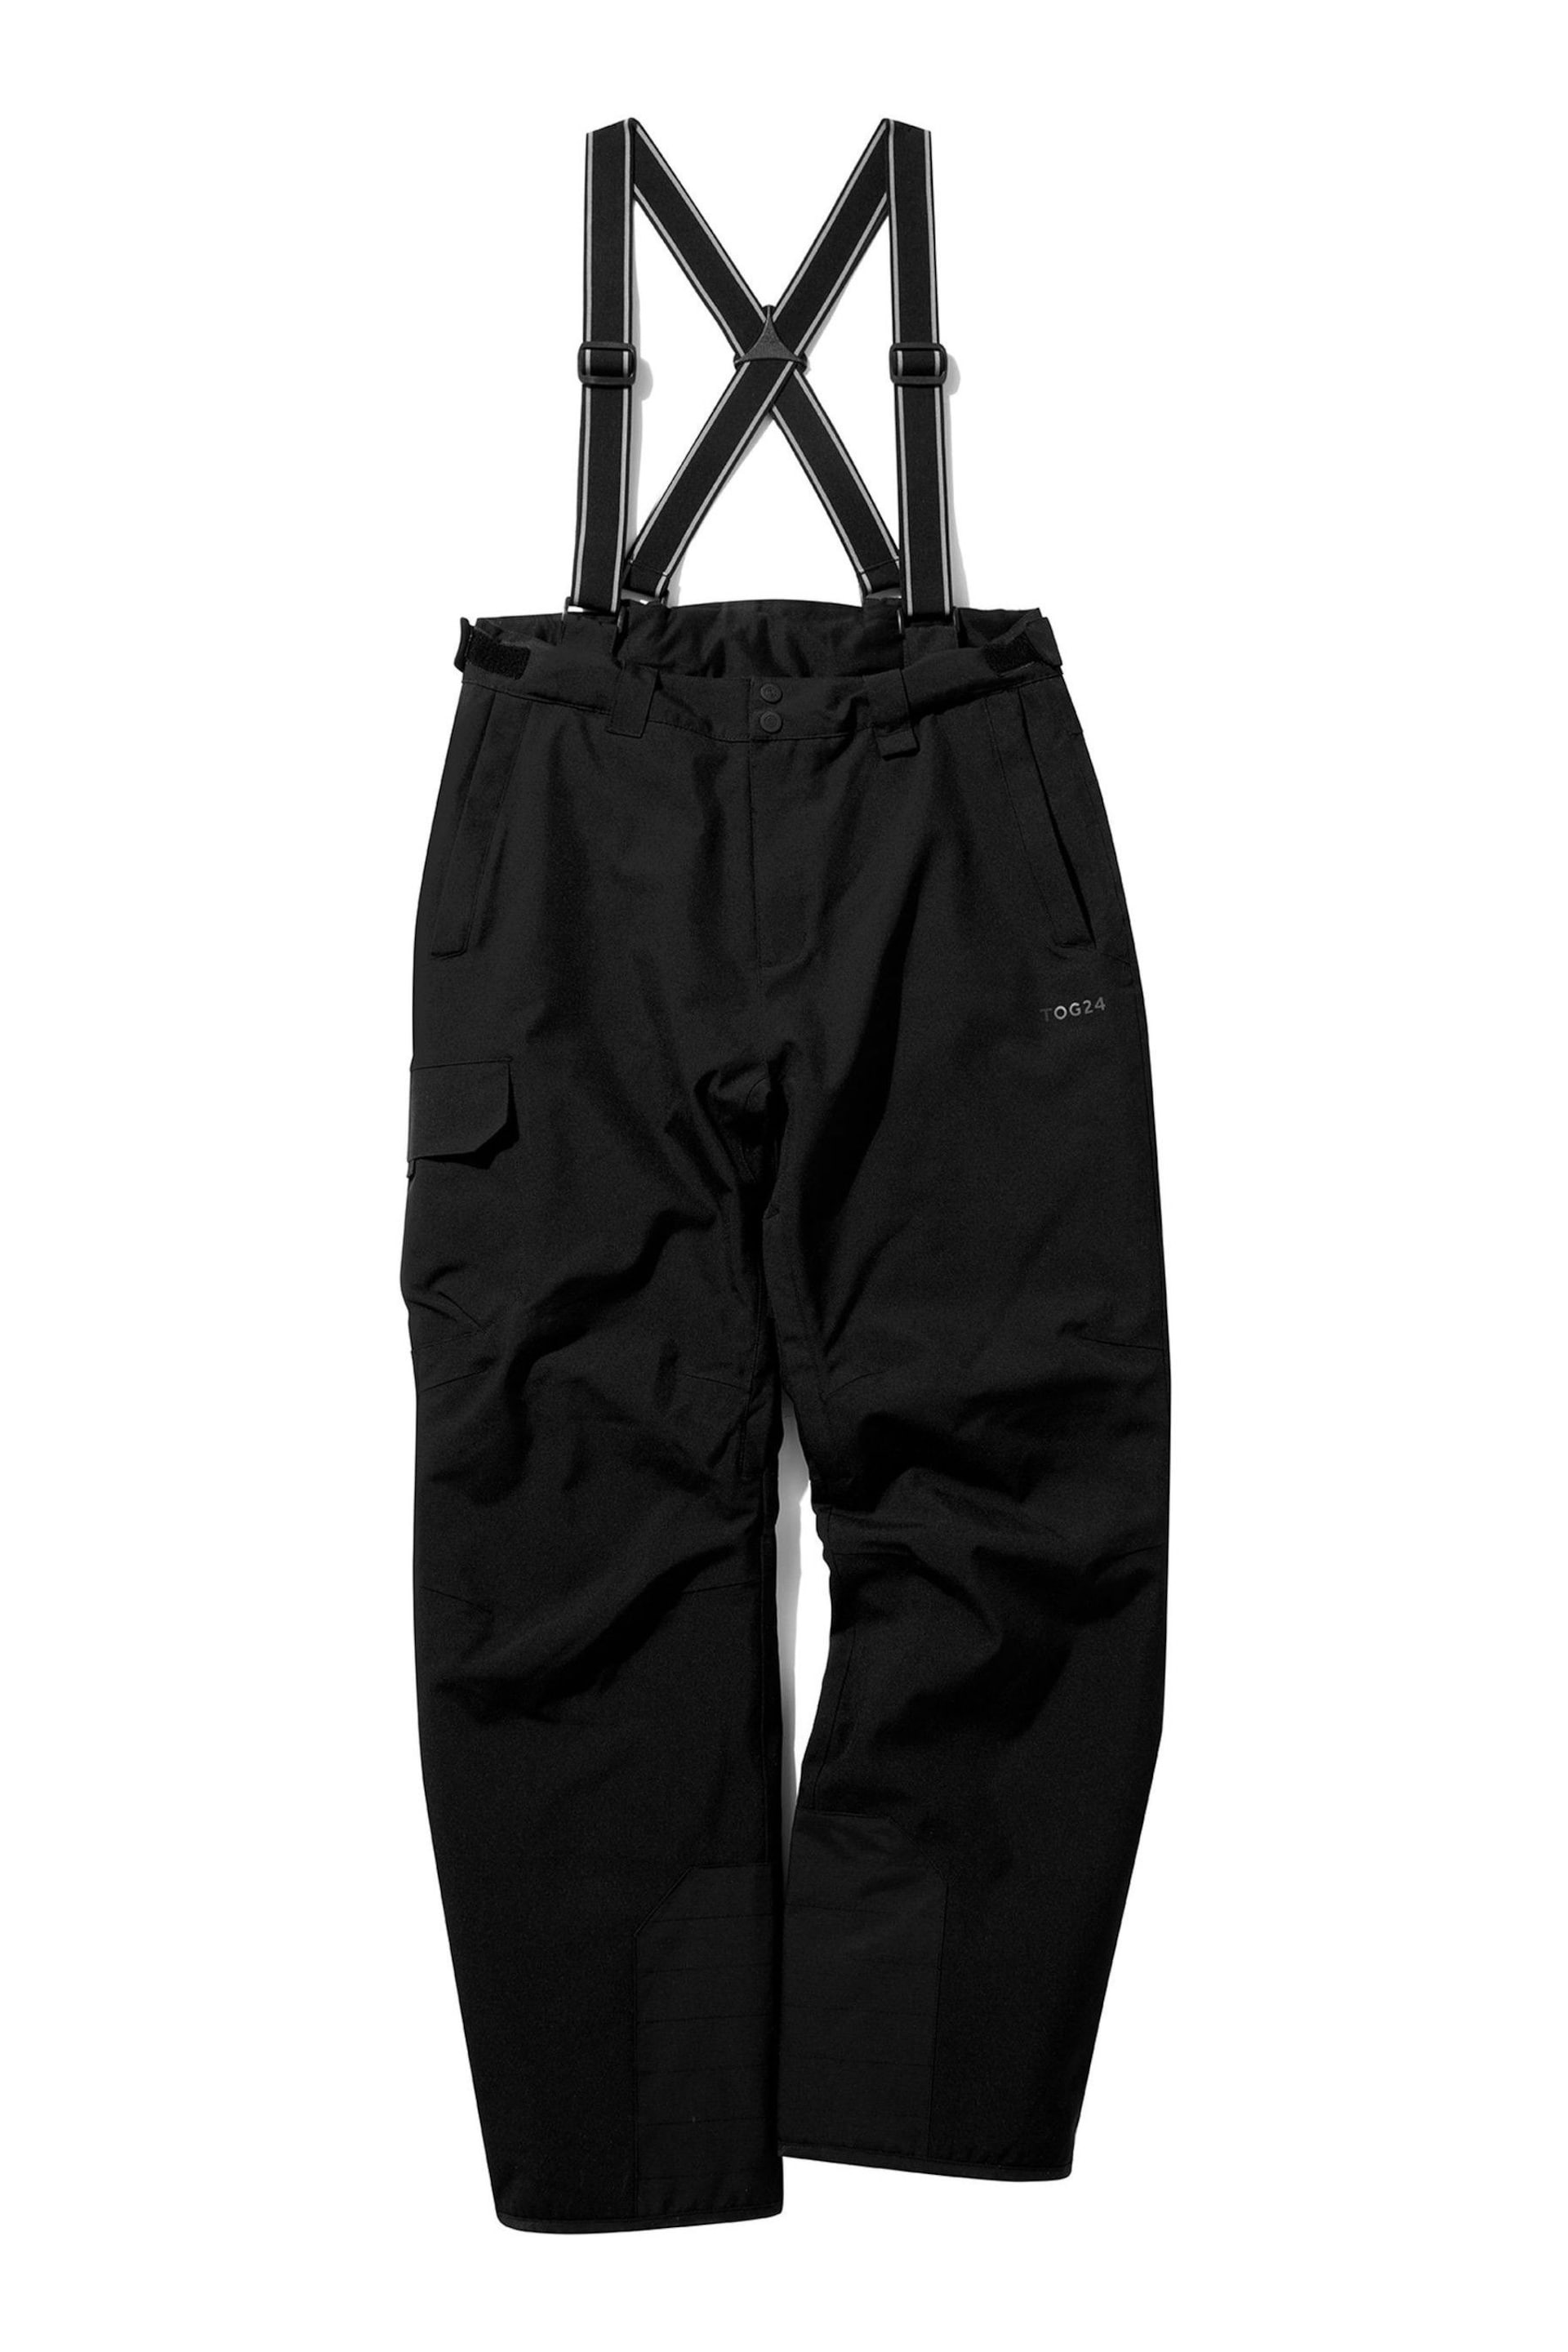 Tog 24 Black Hurricane Ski Salopettes Trousers - Image 4 of 4